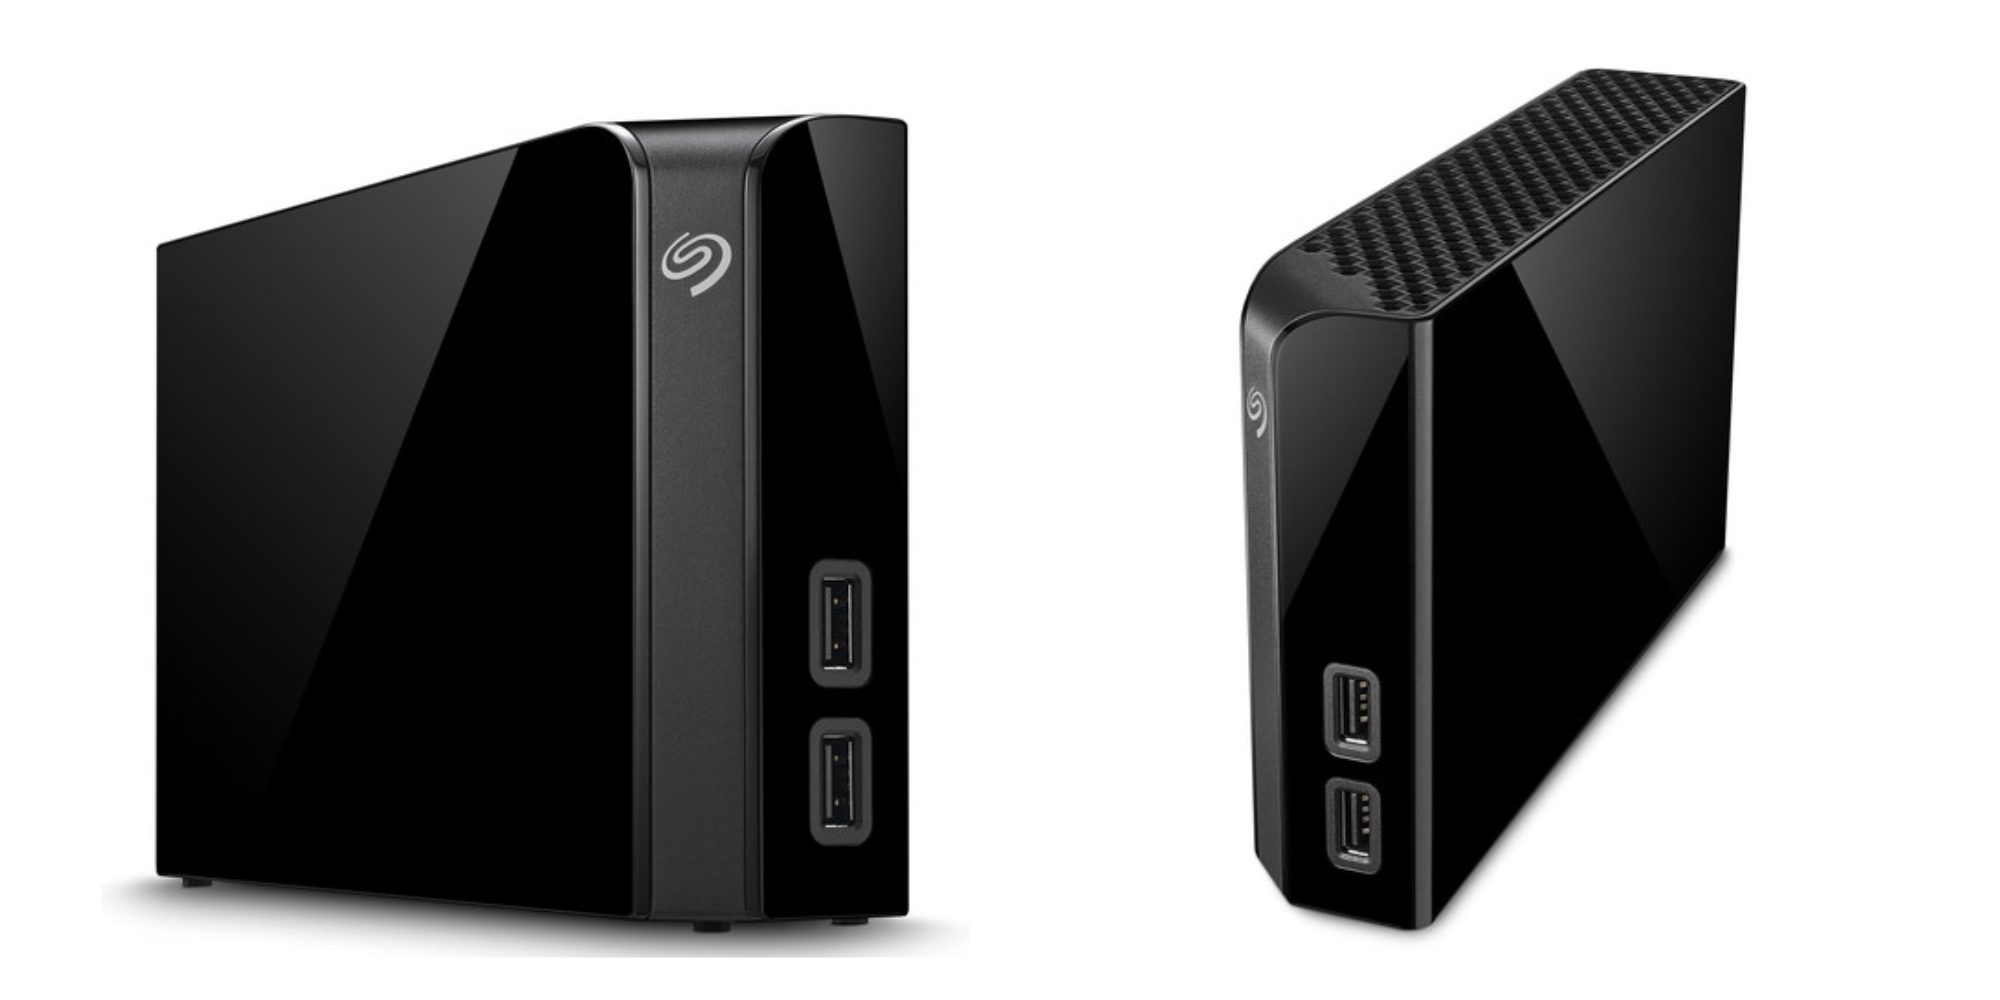 Grab Seagate's Backup Plus Hub USB 3.0 6TB Hard Drive for $100